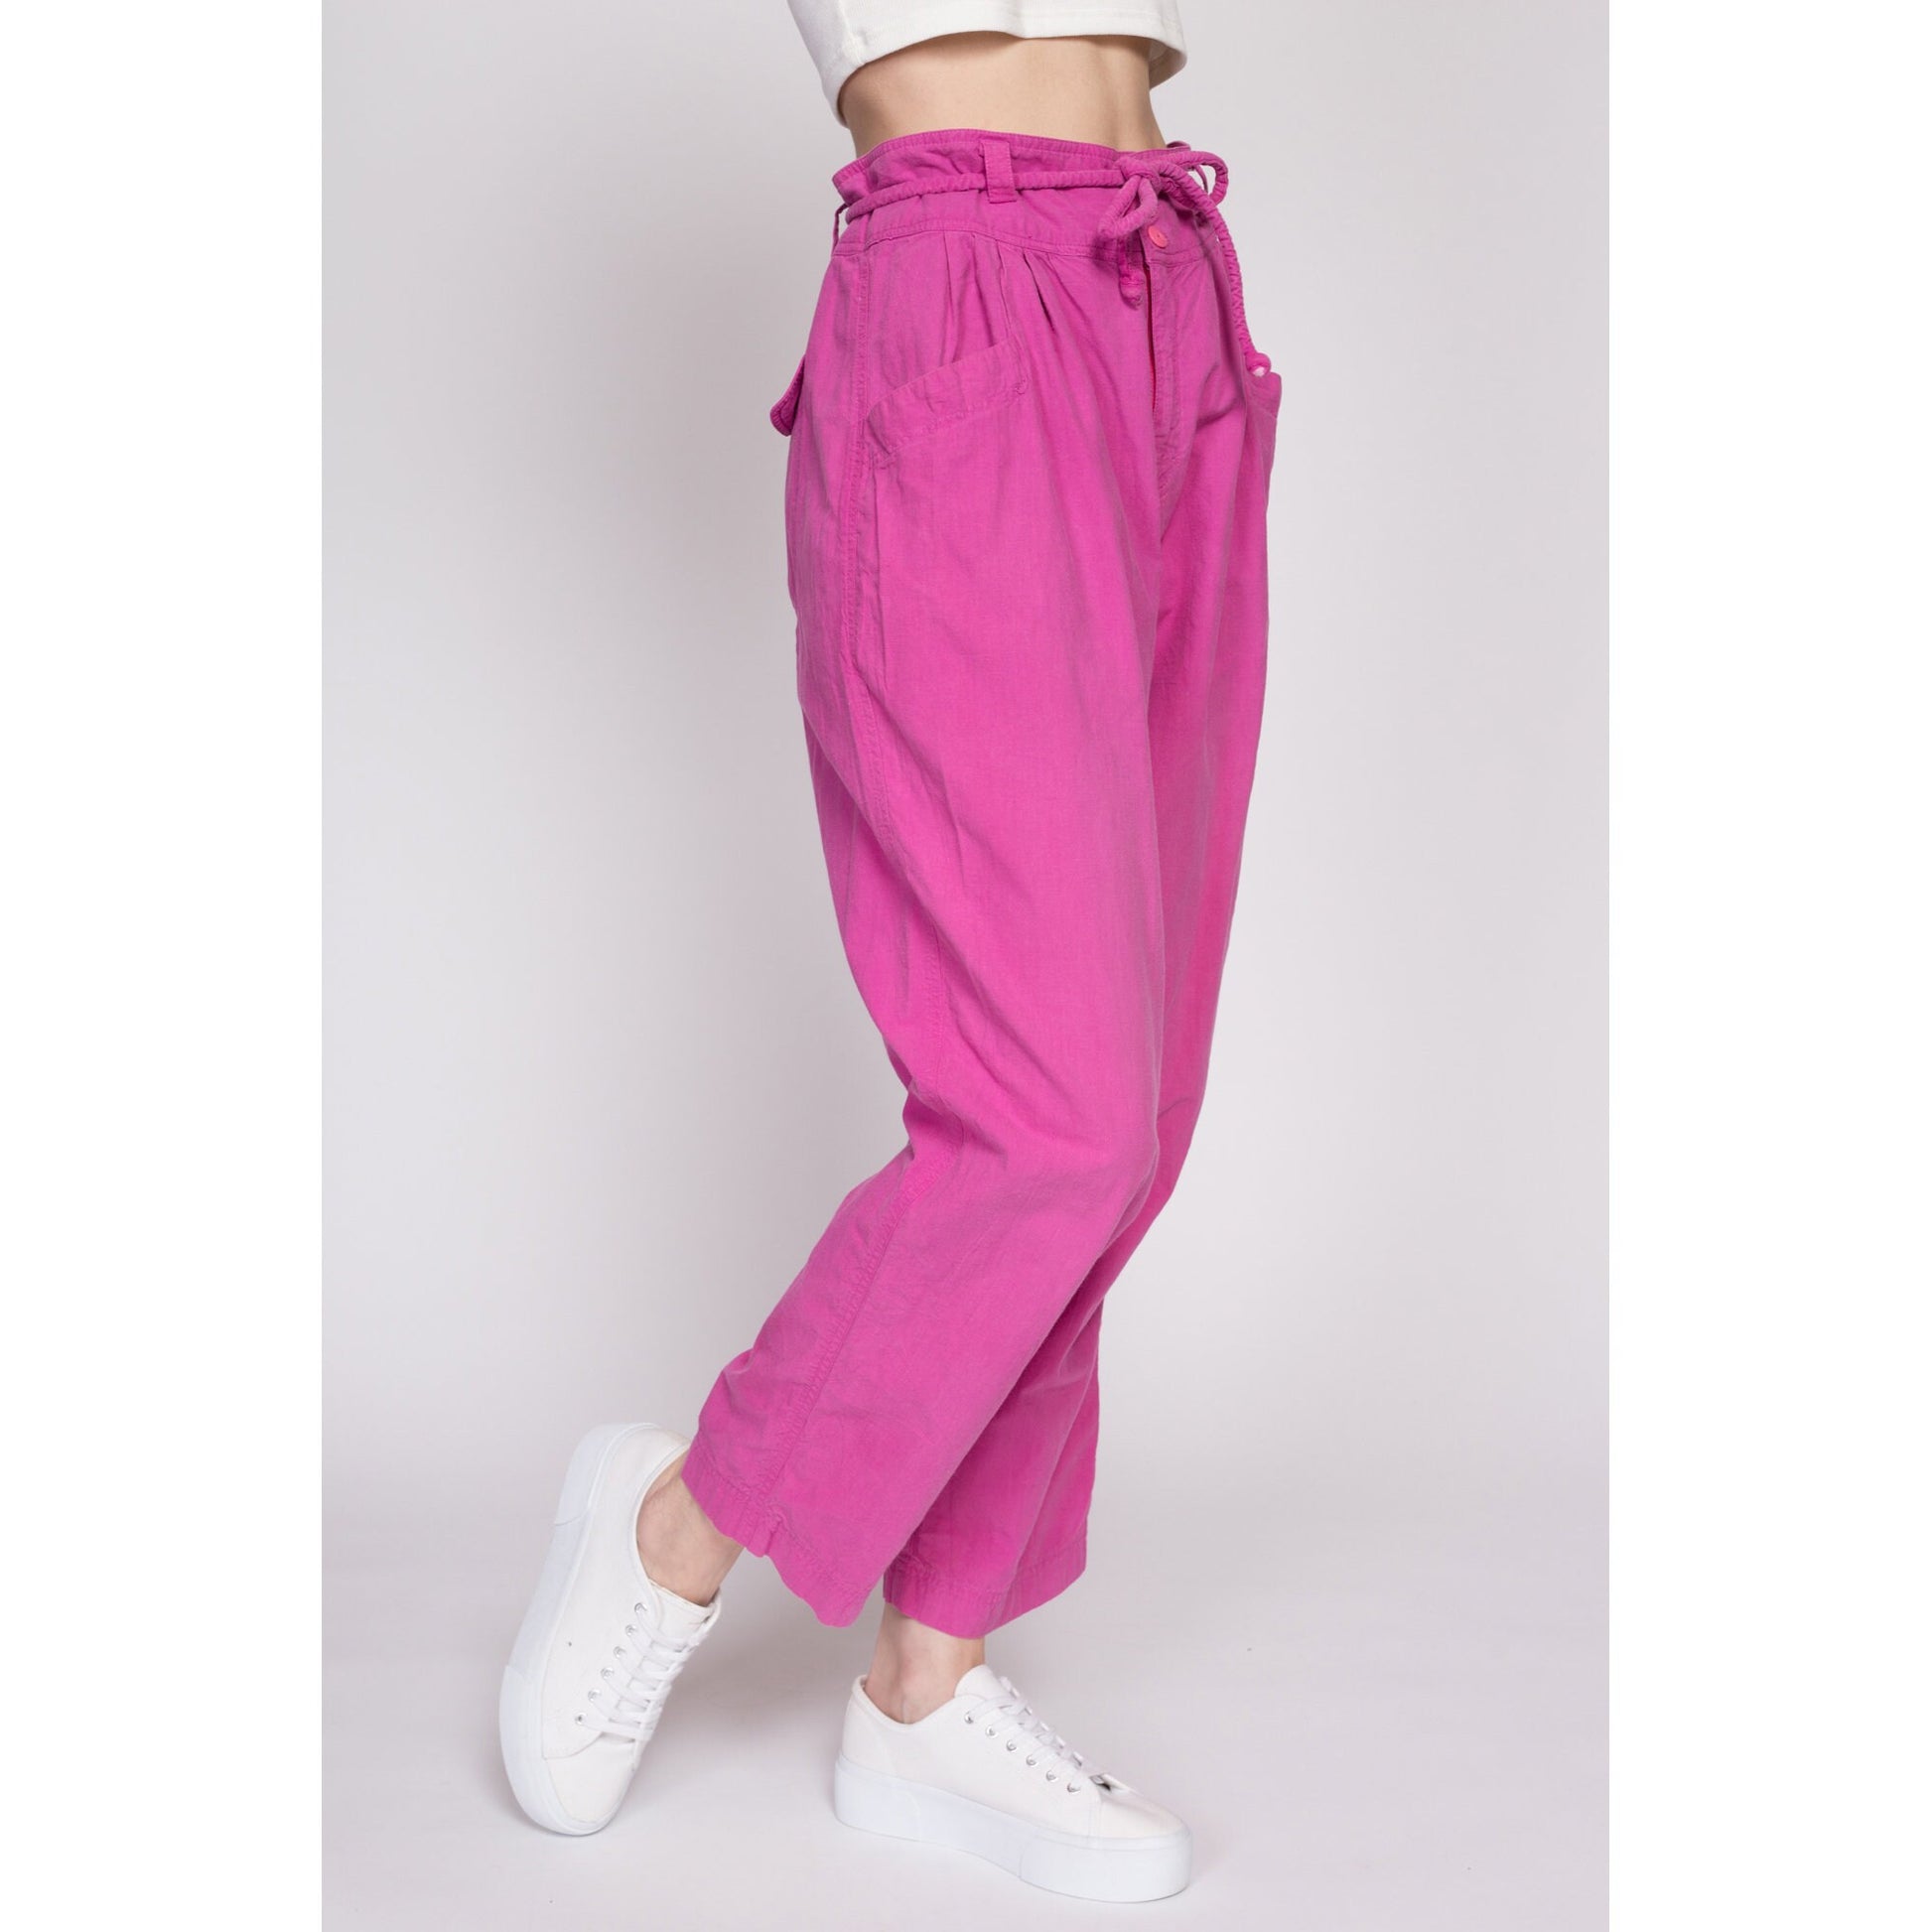 M| 80s Fuschia Cotton High Waisted Pants - Medium, 27.75" | Vintage Tapered Leg Casual Drawstring Waist Streetwear Trousers